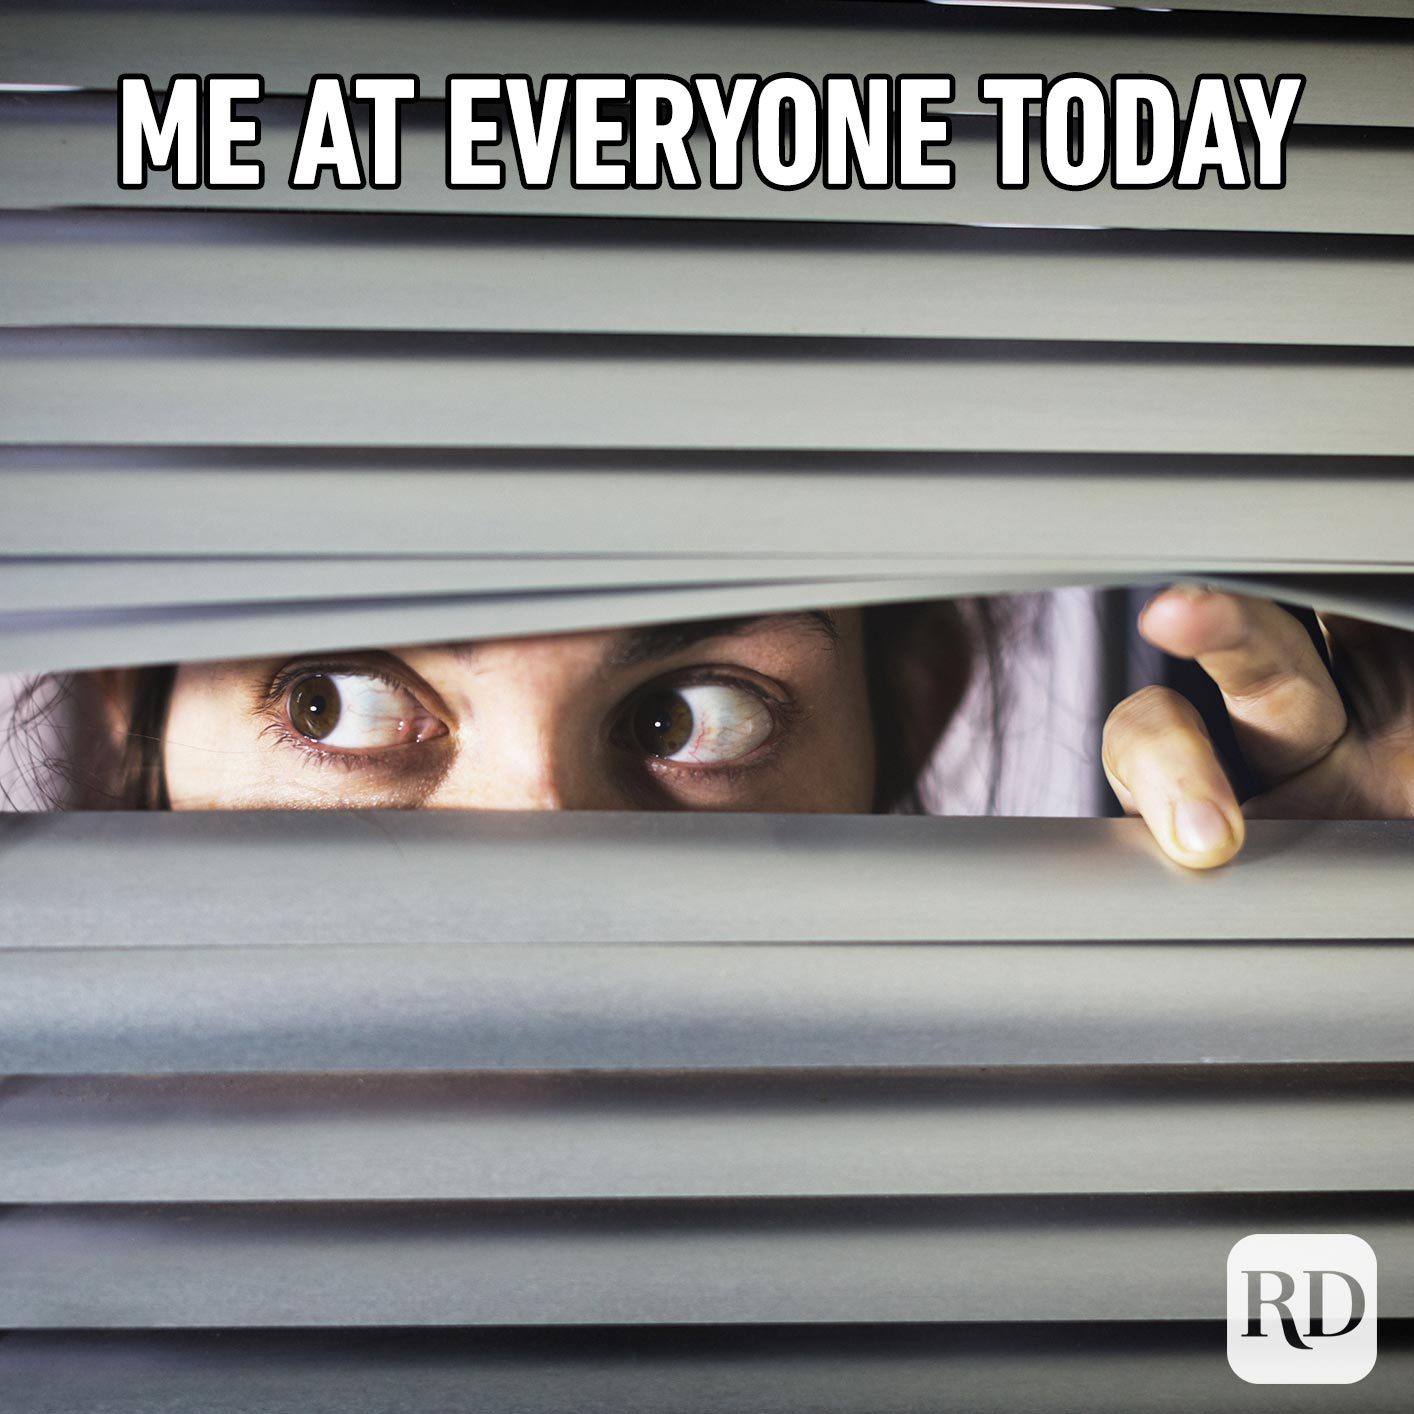 Woman peeking through blinds. Meme text: Me at everyone today